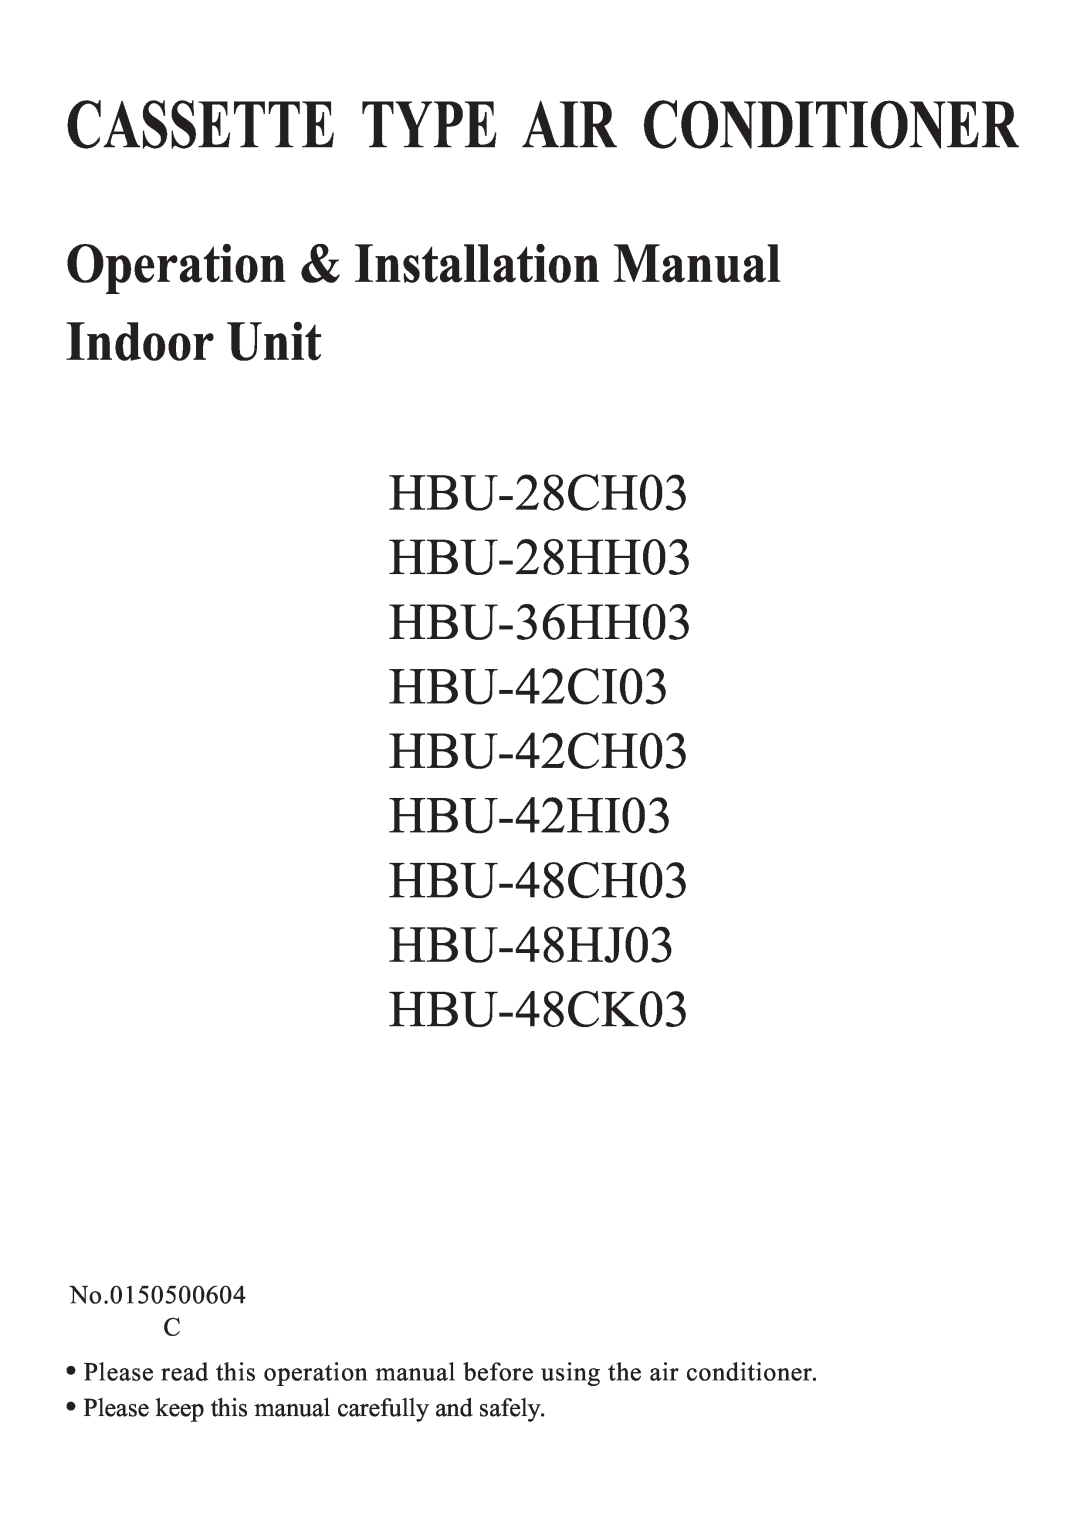 Haier HBU-48CK03 installation manual Cassette Type Air Conditioner, Operation & Installation Manual Indoor Unit 